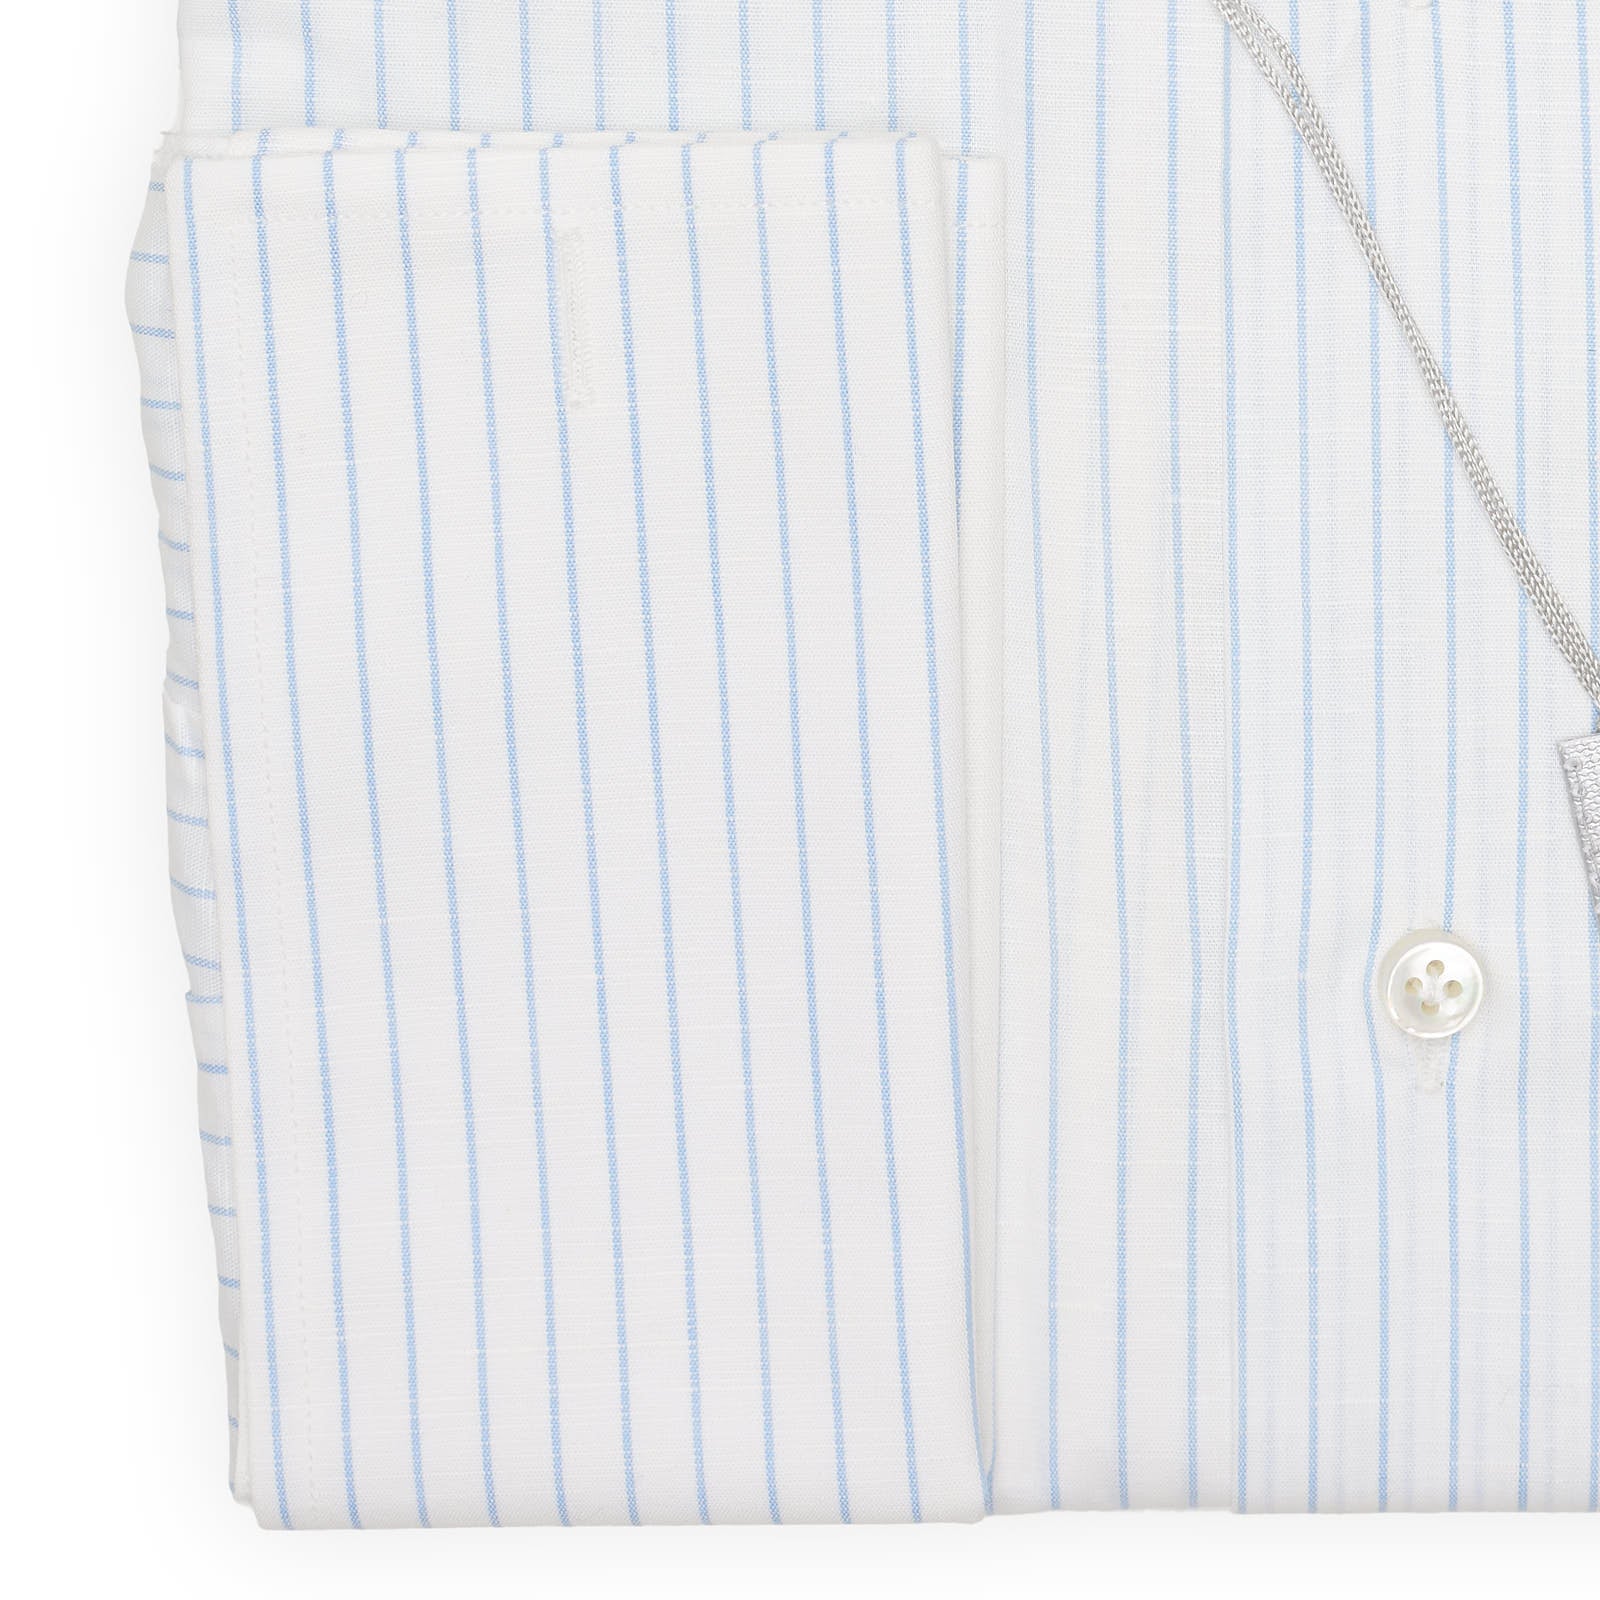 BARBA Handmade Striped Cotton-Linen French Cuff Dress Shirt EU 44 NEW US 17.5